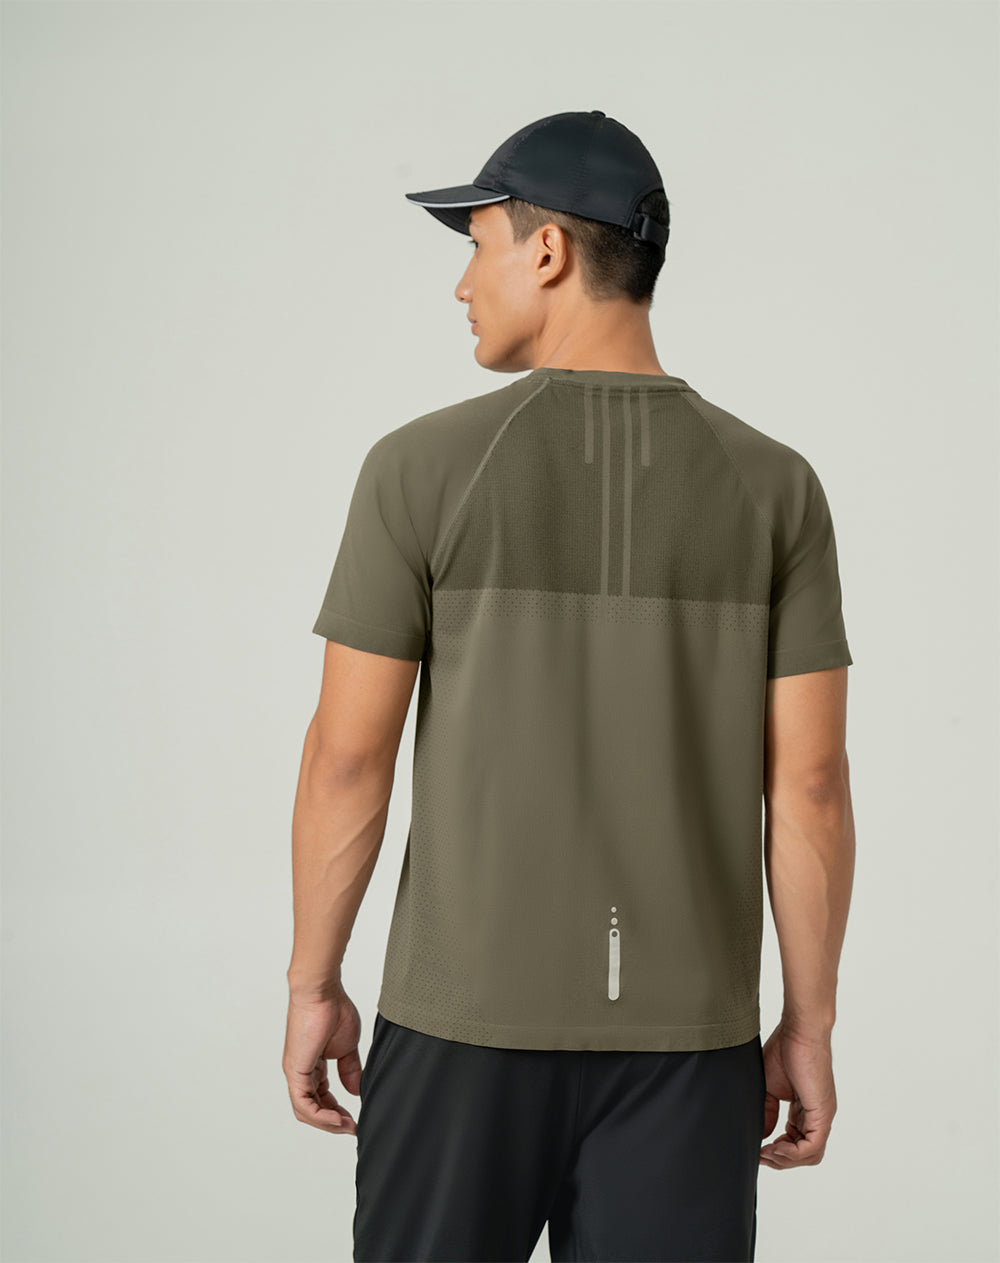 Camiseta slim fit manga corta verde militar